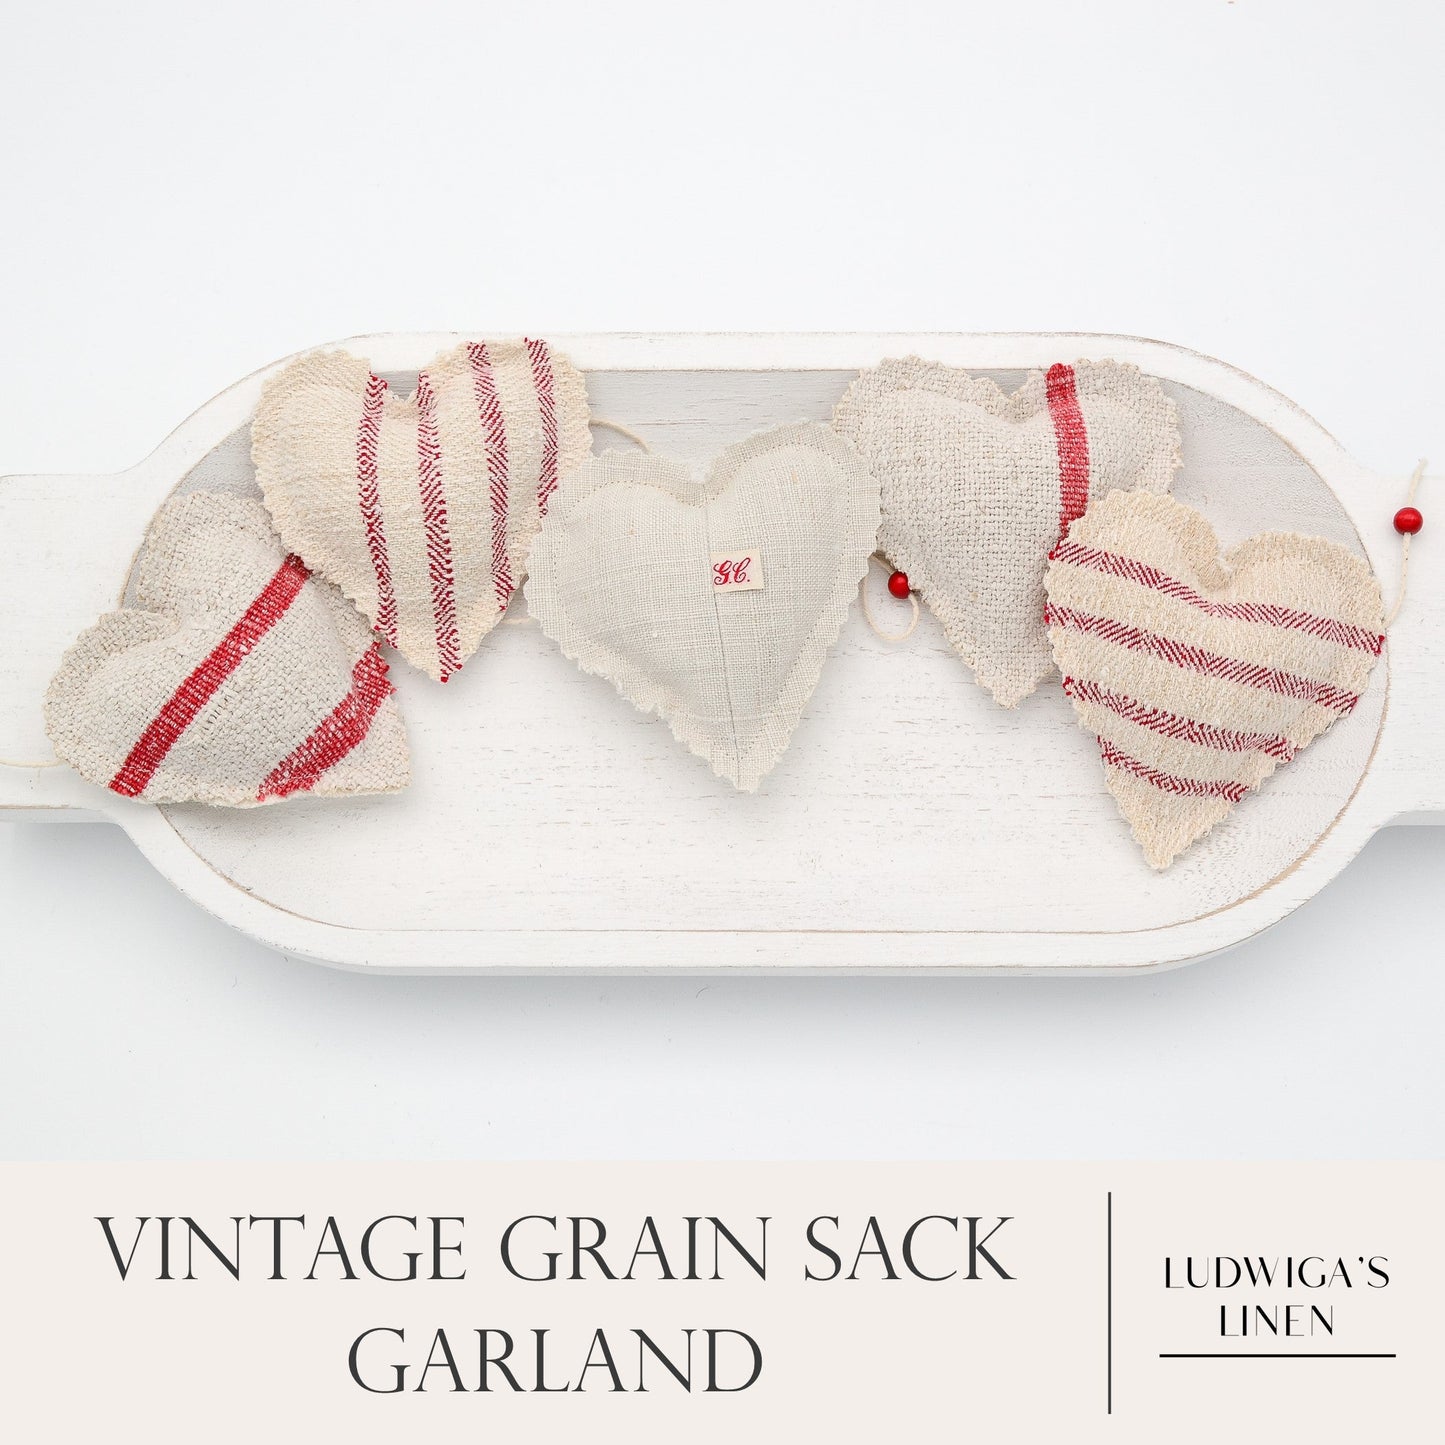 Vintage European grain sack linen garland, white cotton twine and wooden beads between hearts